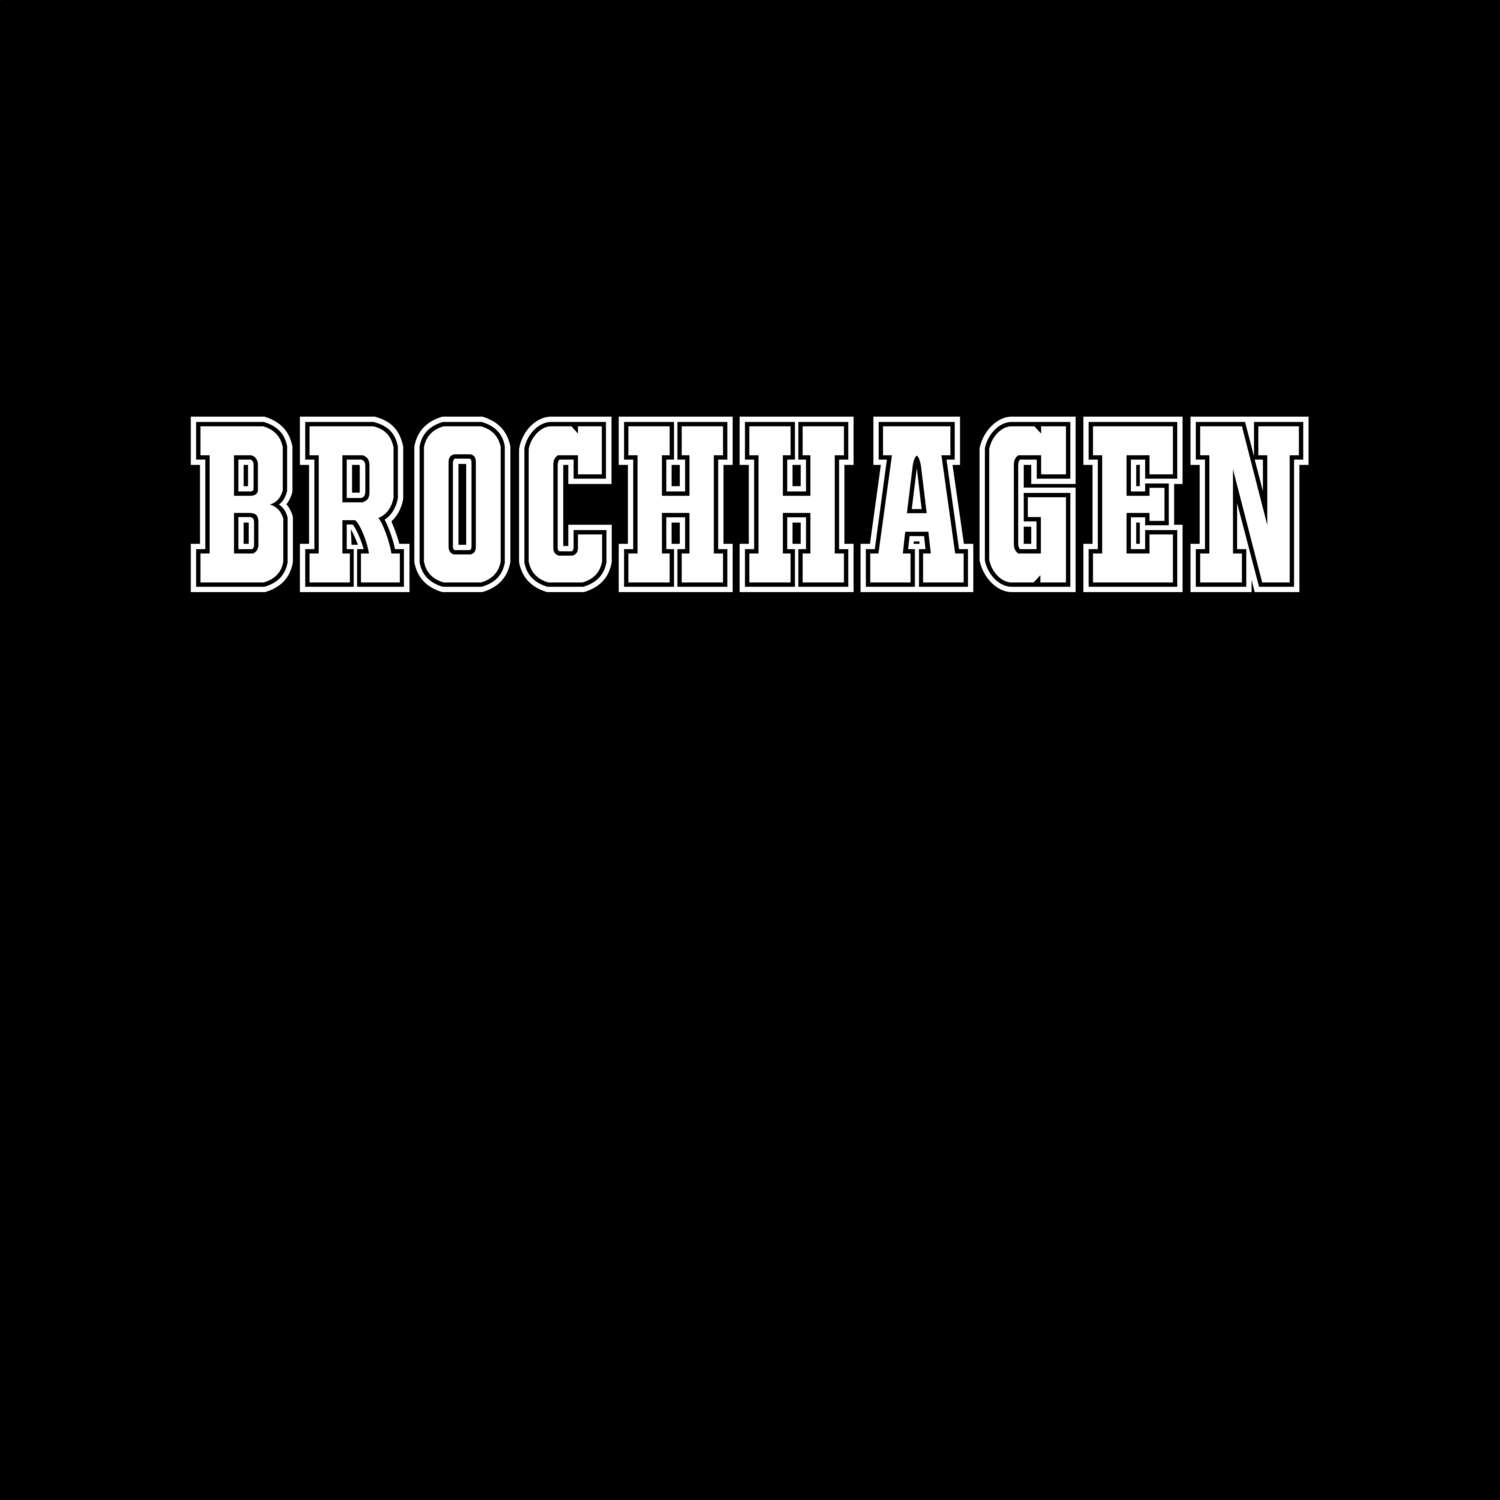 Brochhagen T-Shirt »Classic«